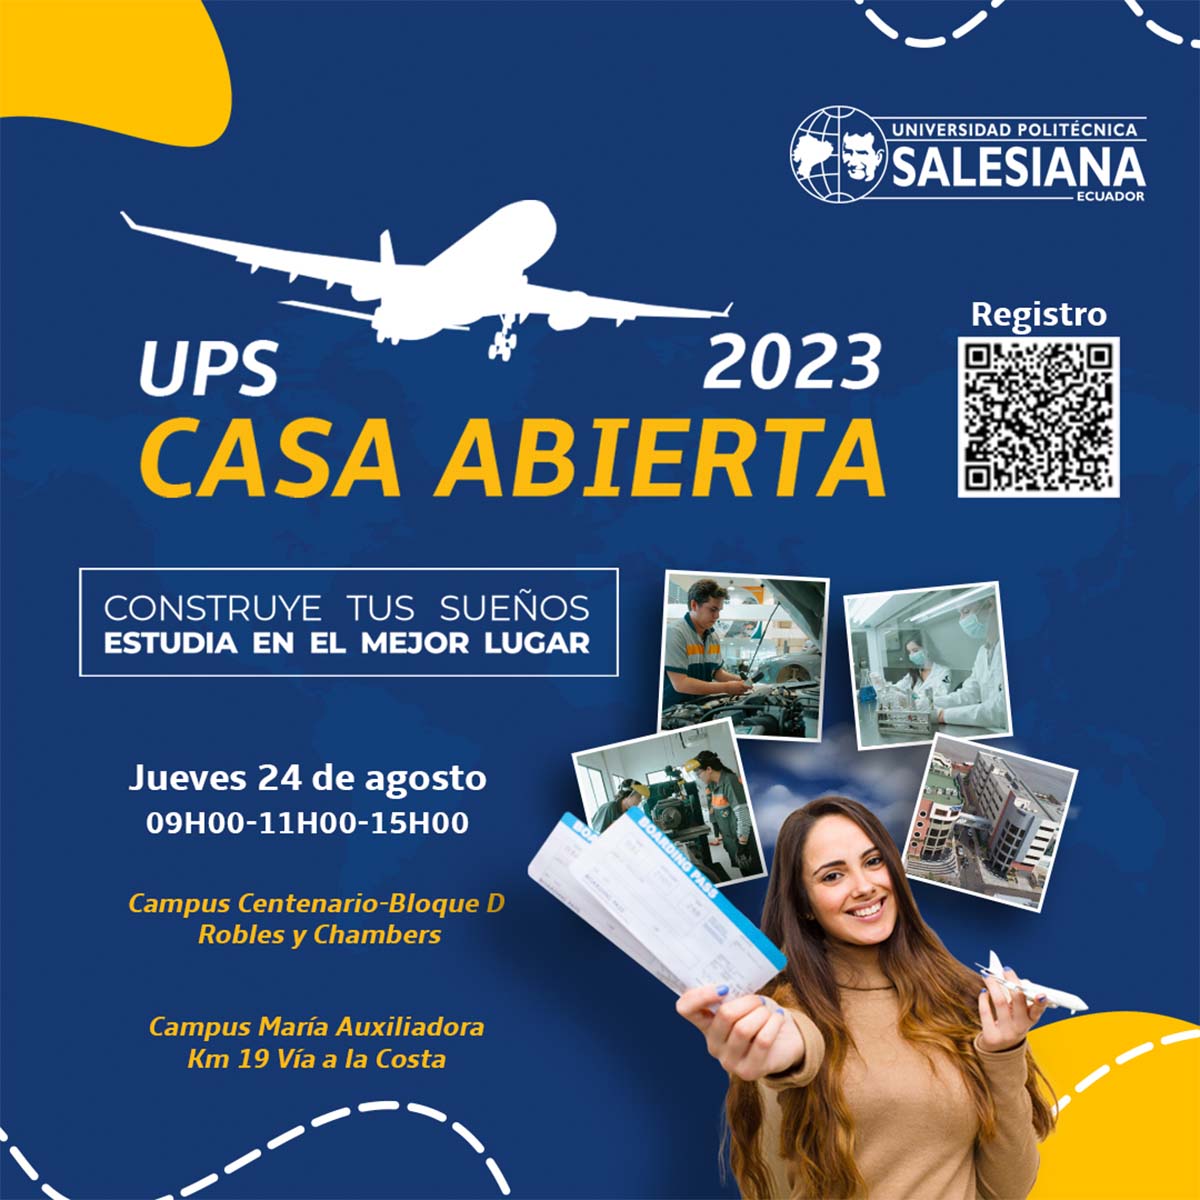 Afiche promocional de la Casa abierta UPS 2023 - sede Guayaquil